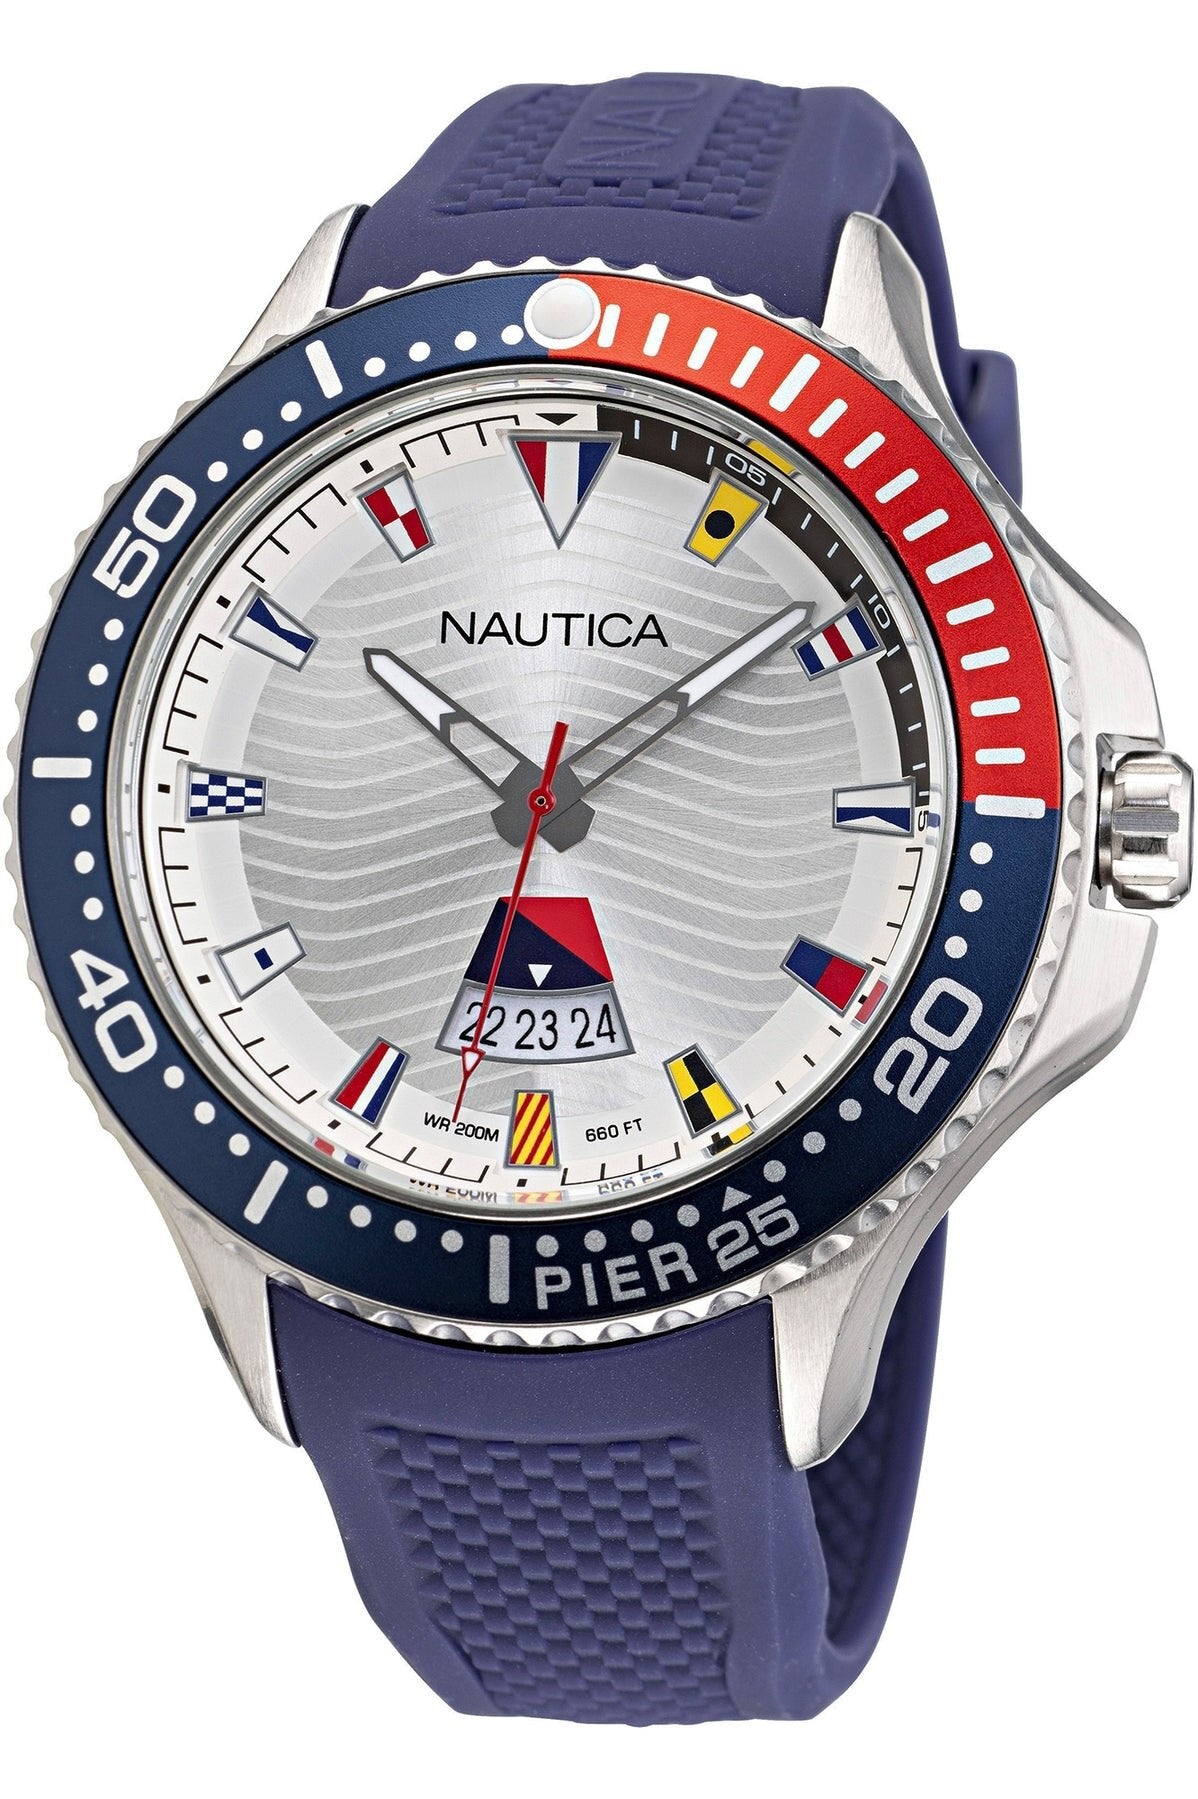 Nautica Men's Watch, Blue, Chronograph